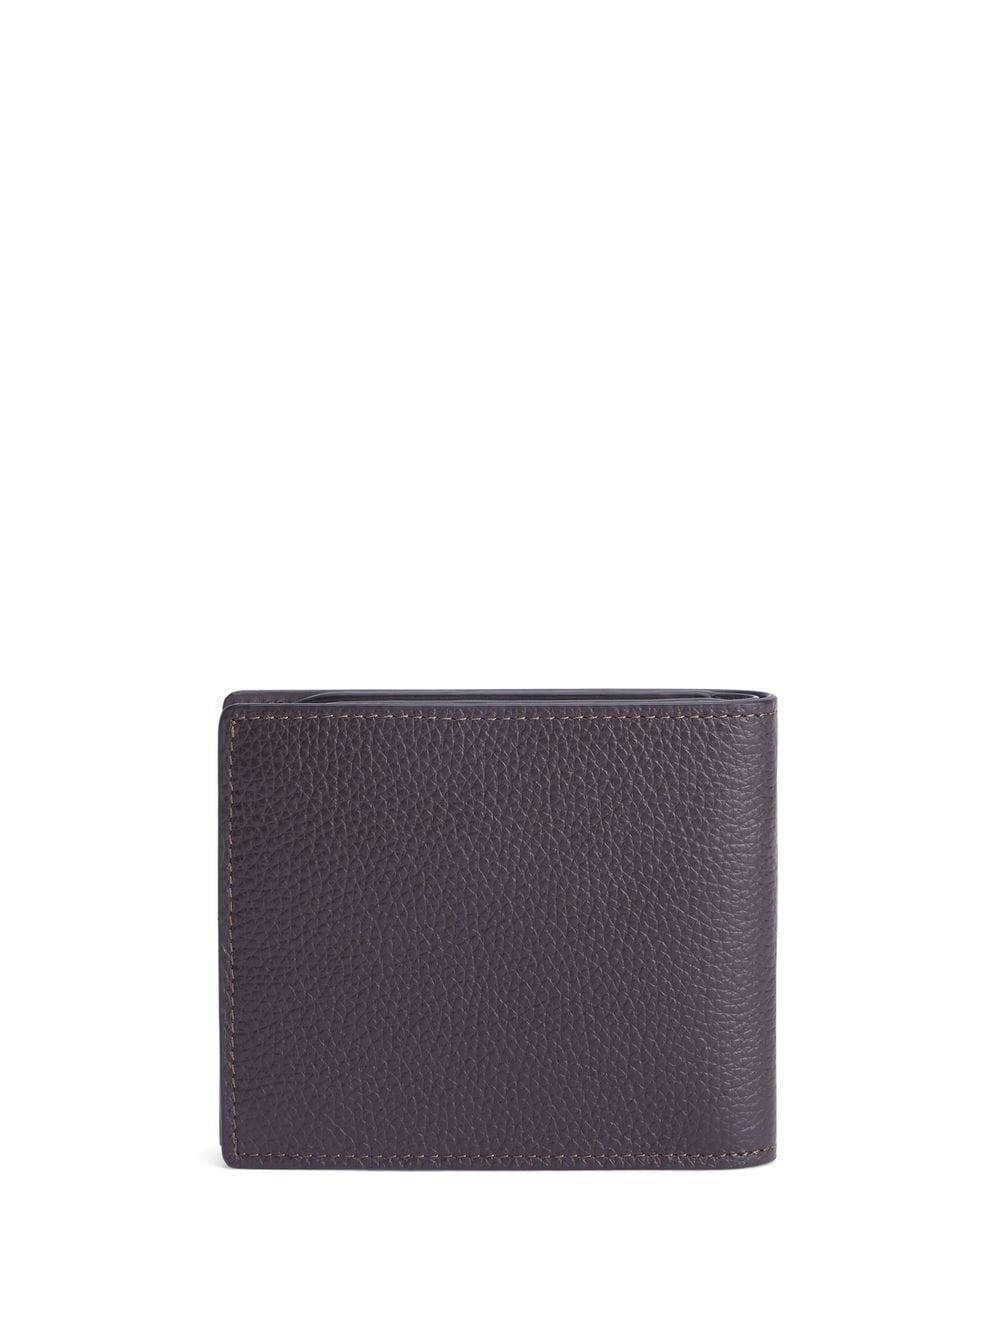 Image 2 of Giuseppe Zanotti Albert leather wallet